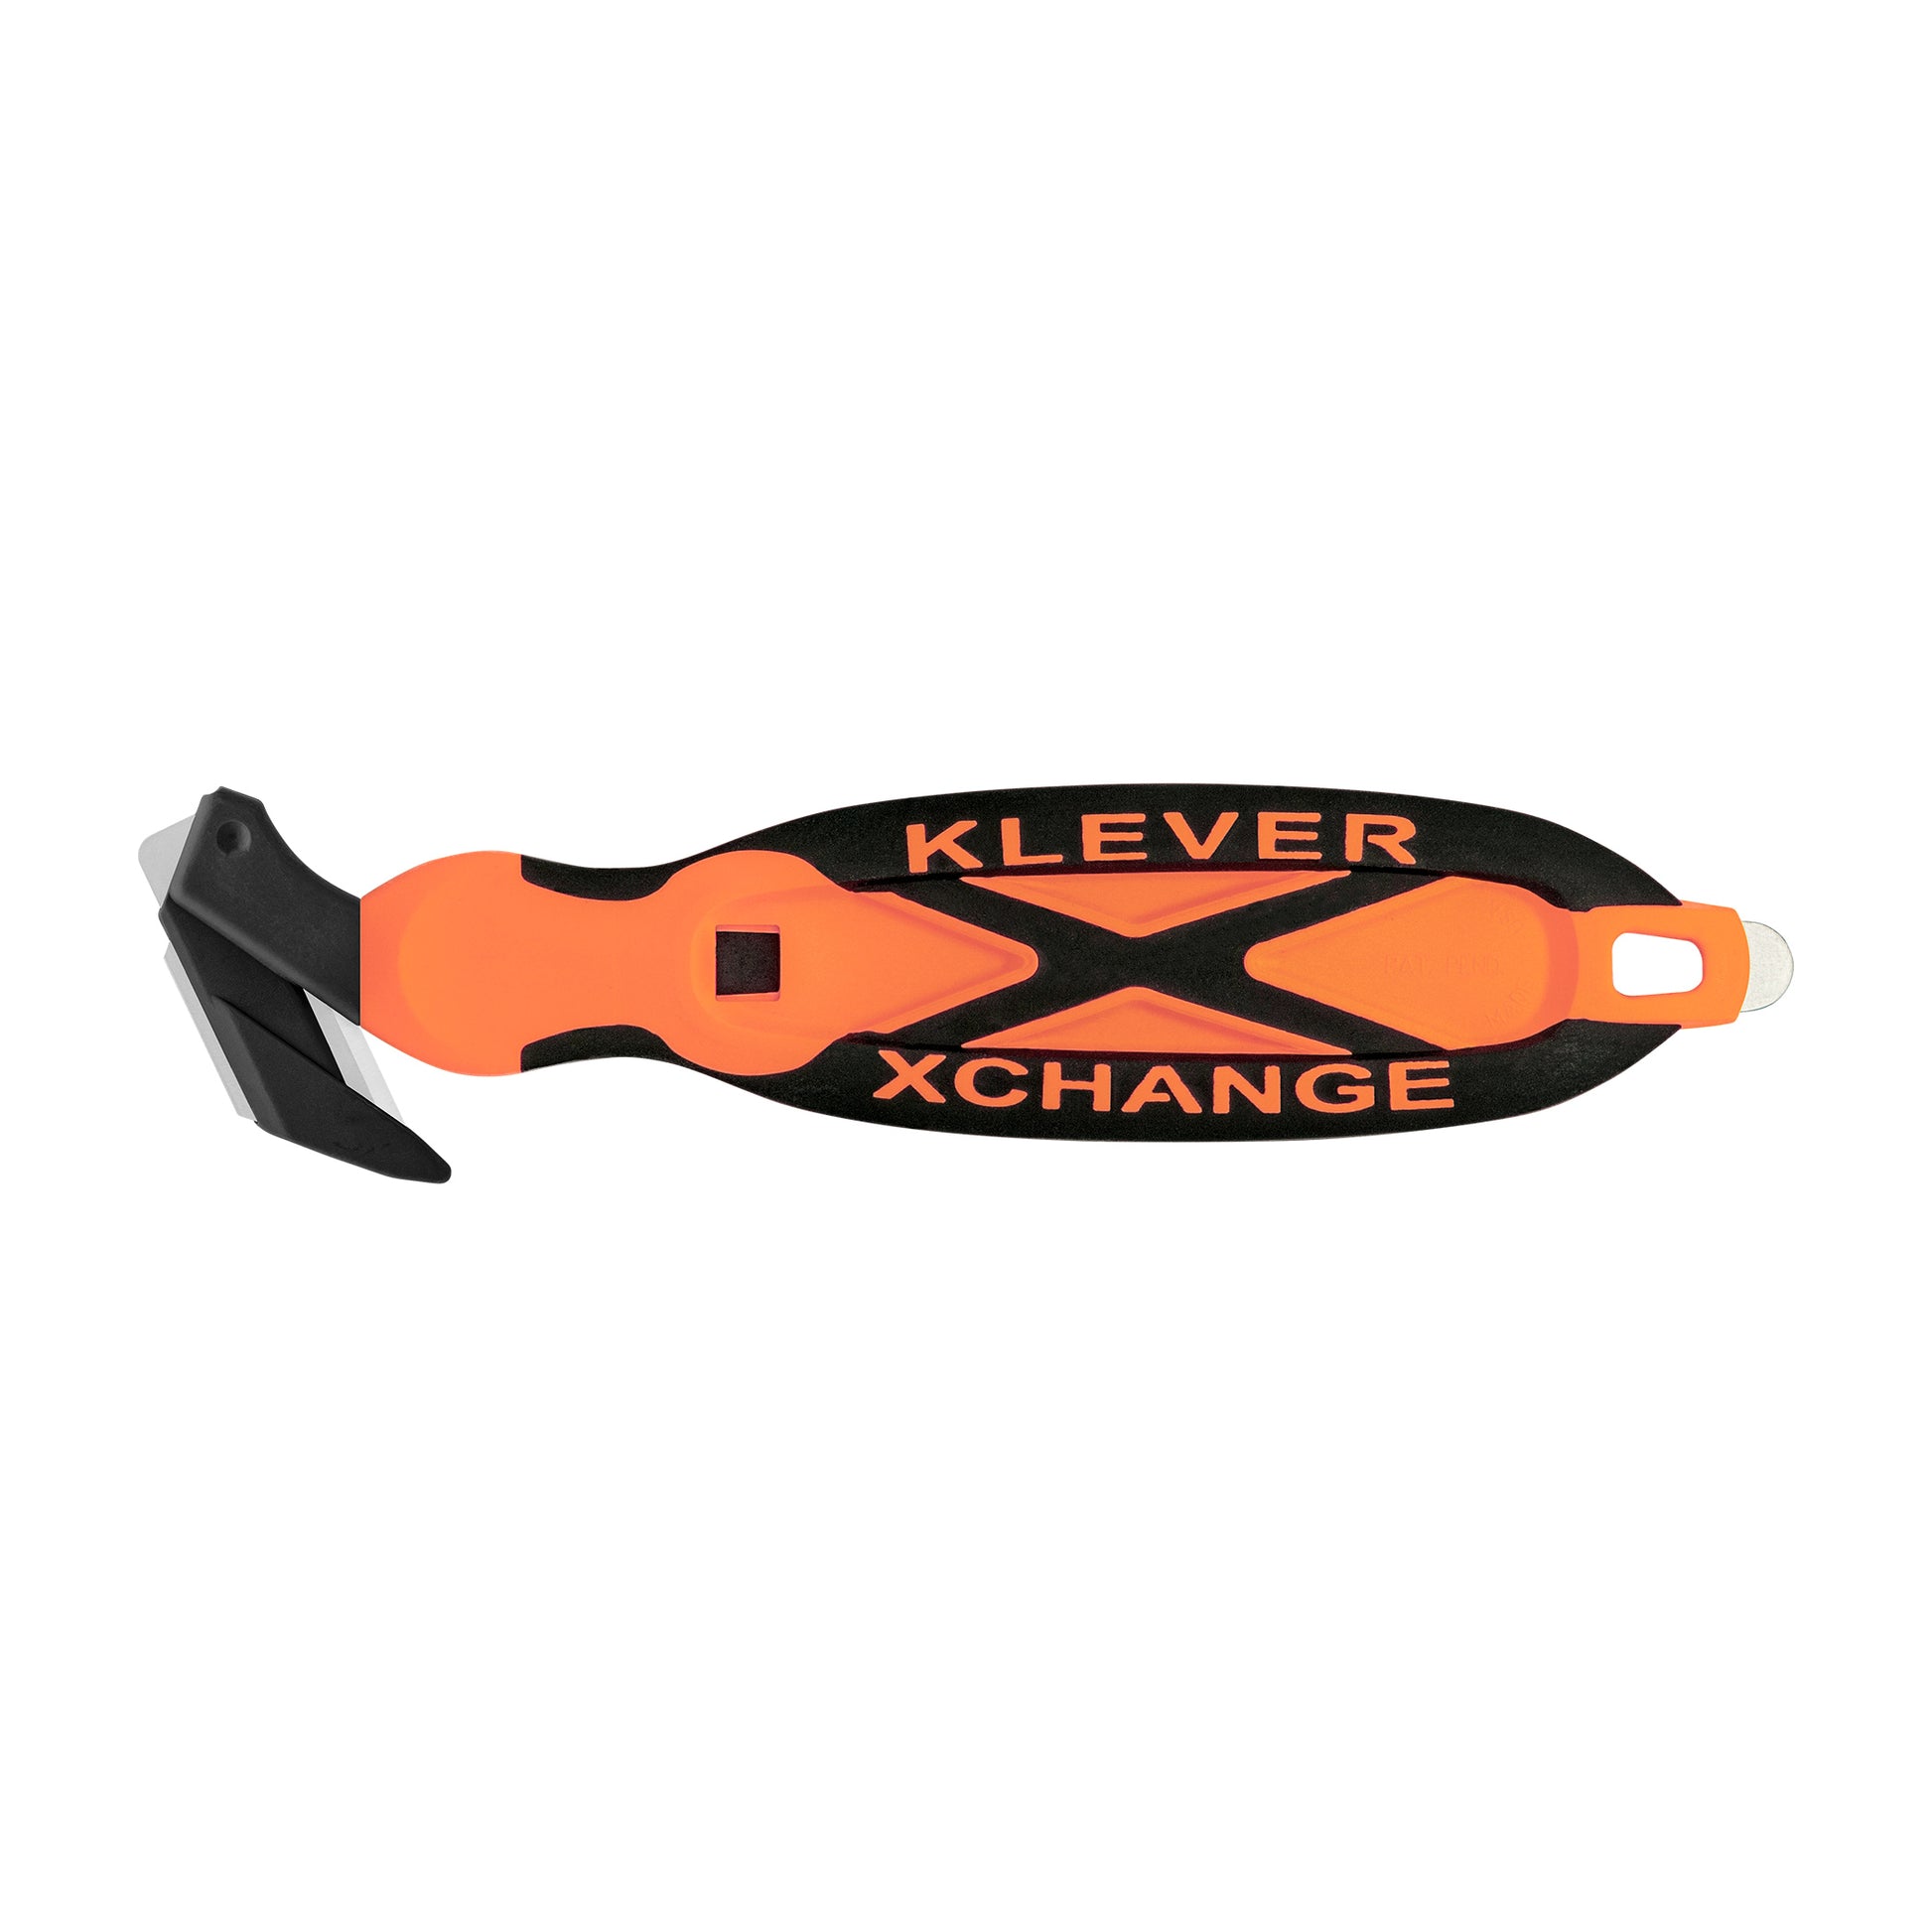 KCJ-XC-35 Klever X-Change (Wider cut head with Scraper) - DaltonSafety